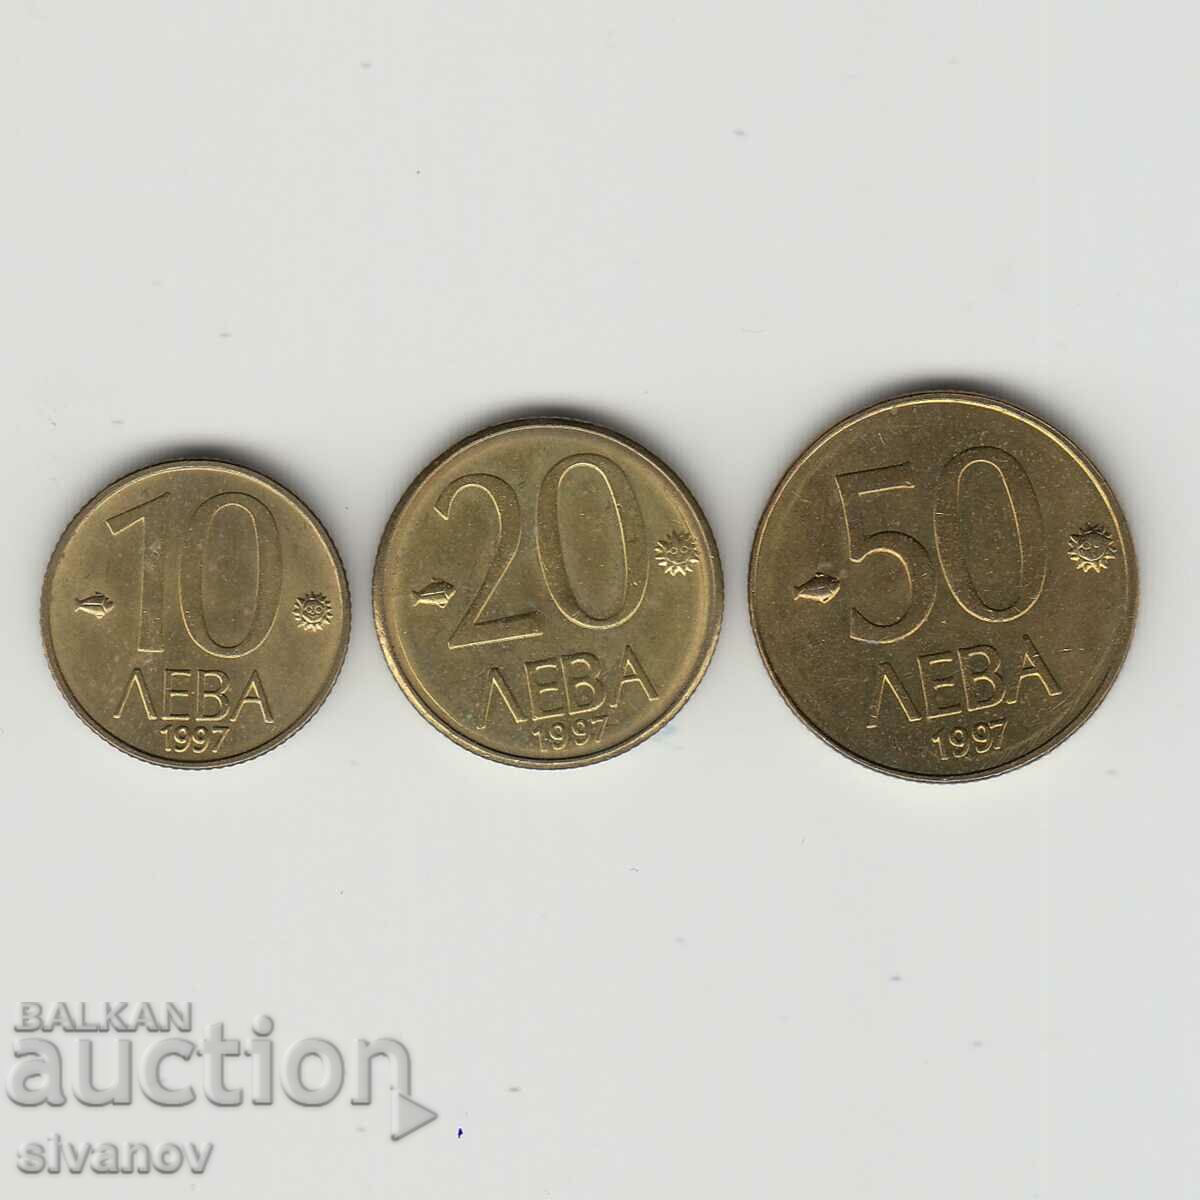 Bulgaria 10, 20, 50 leva 1997 set lot #5411